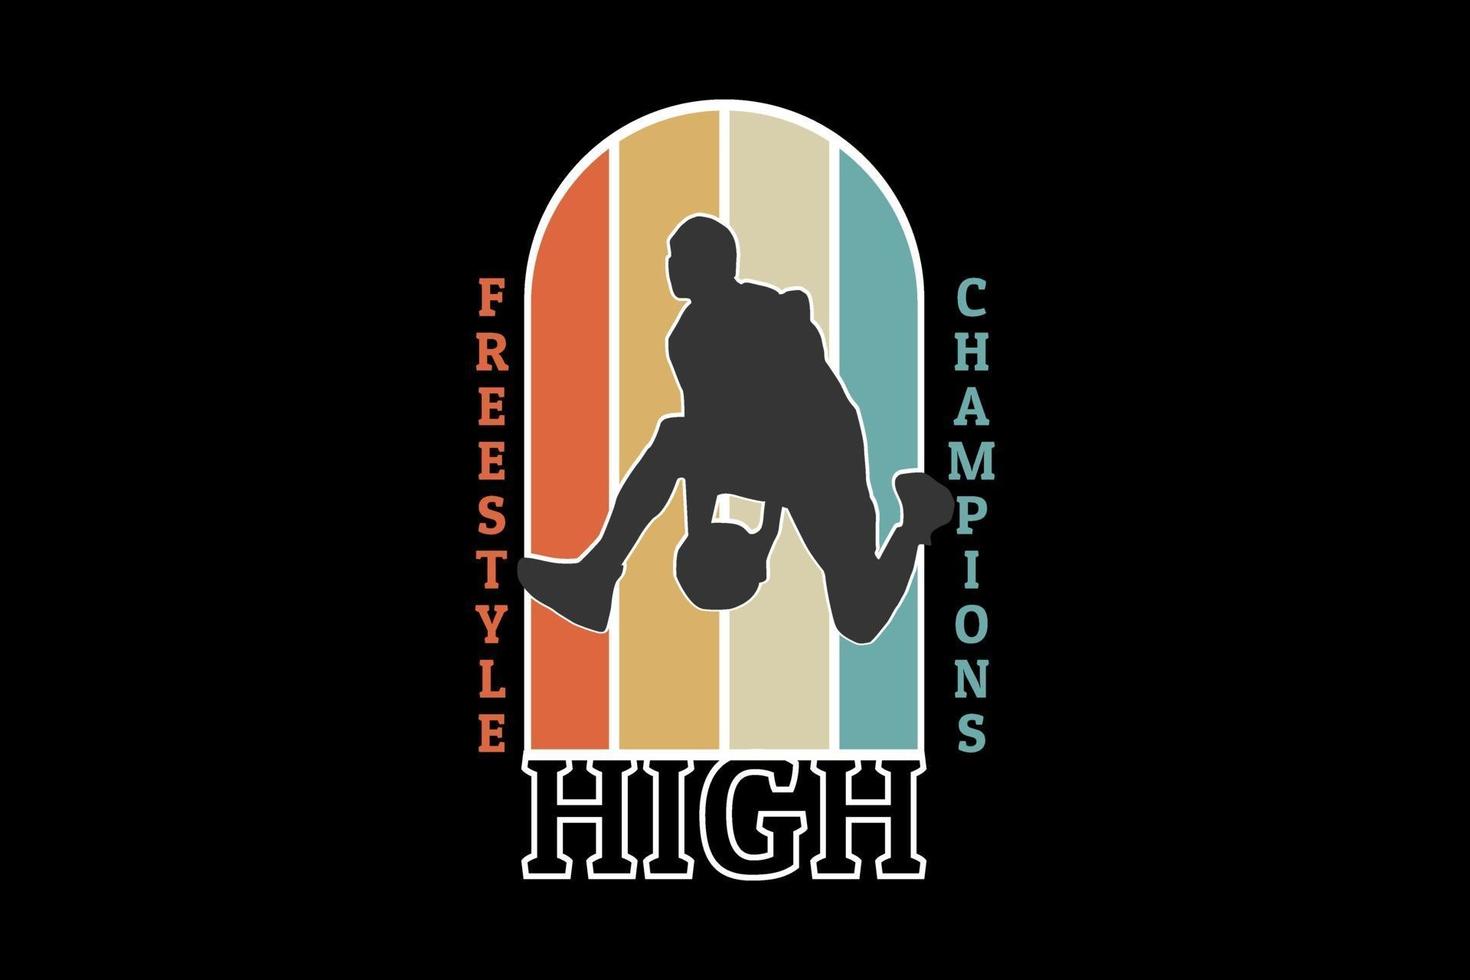 high freestyle champions silhouette retro design vector